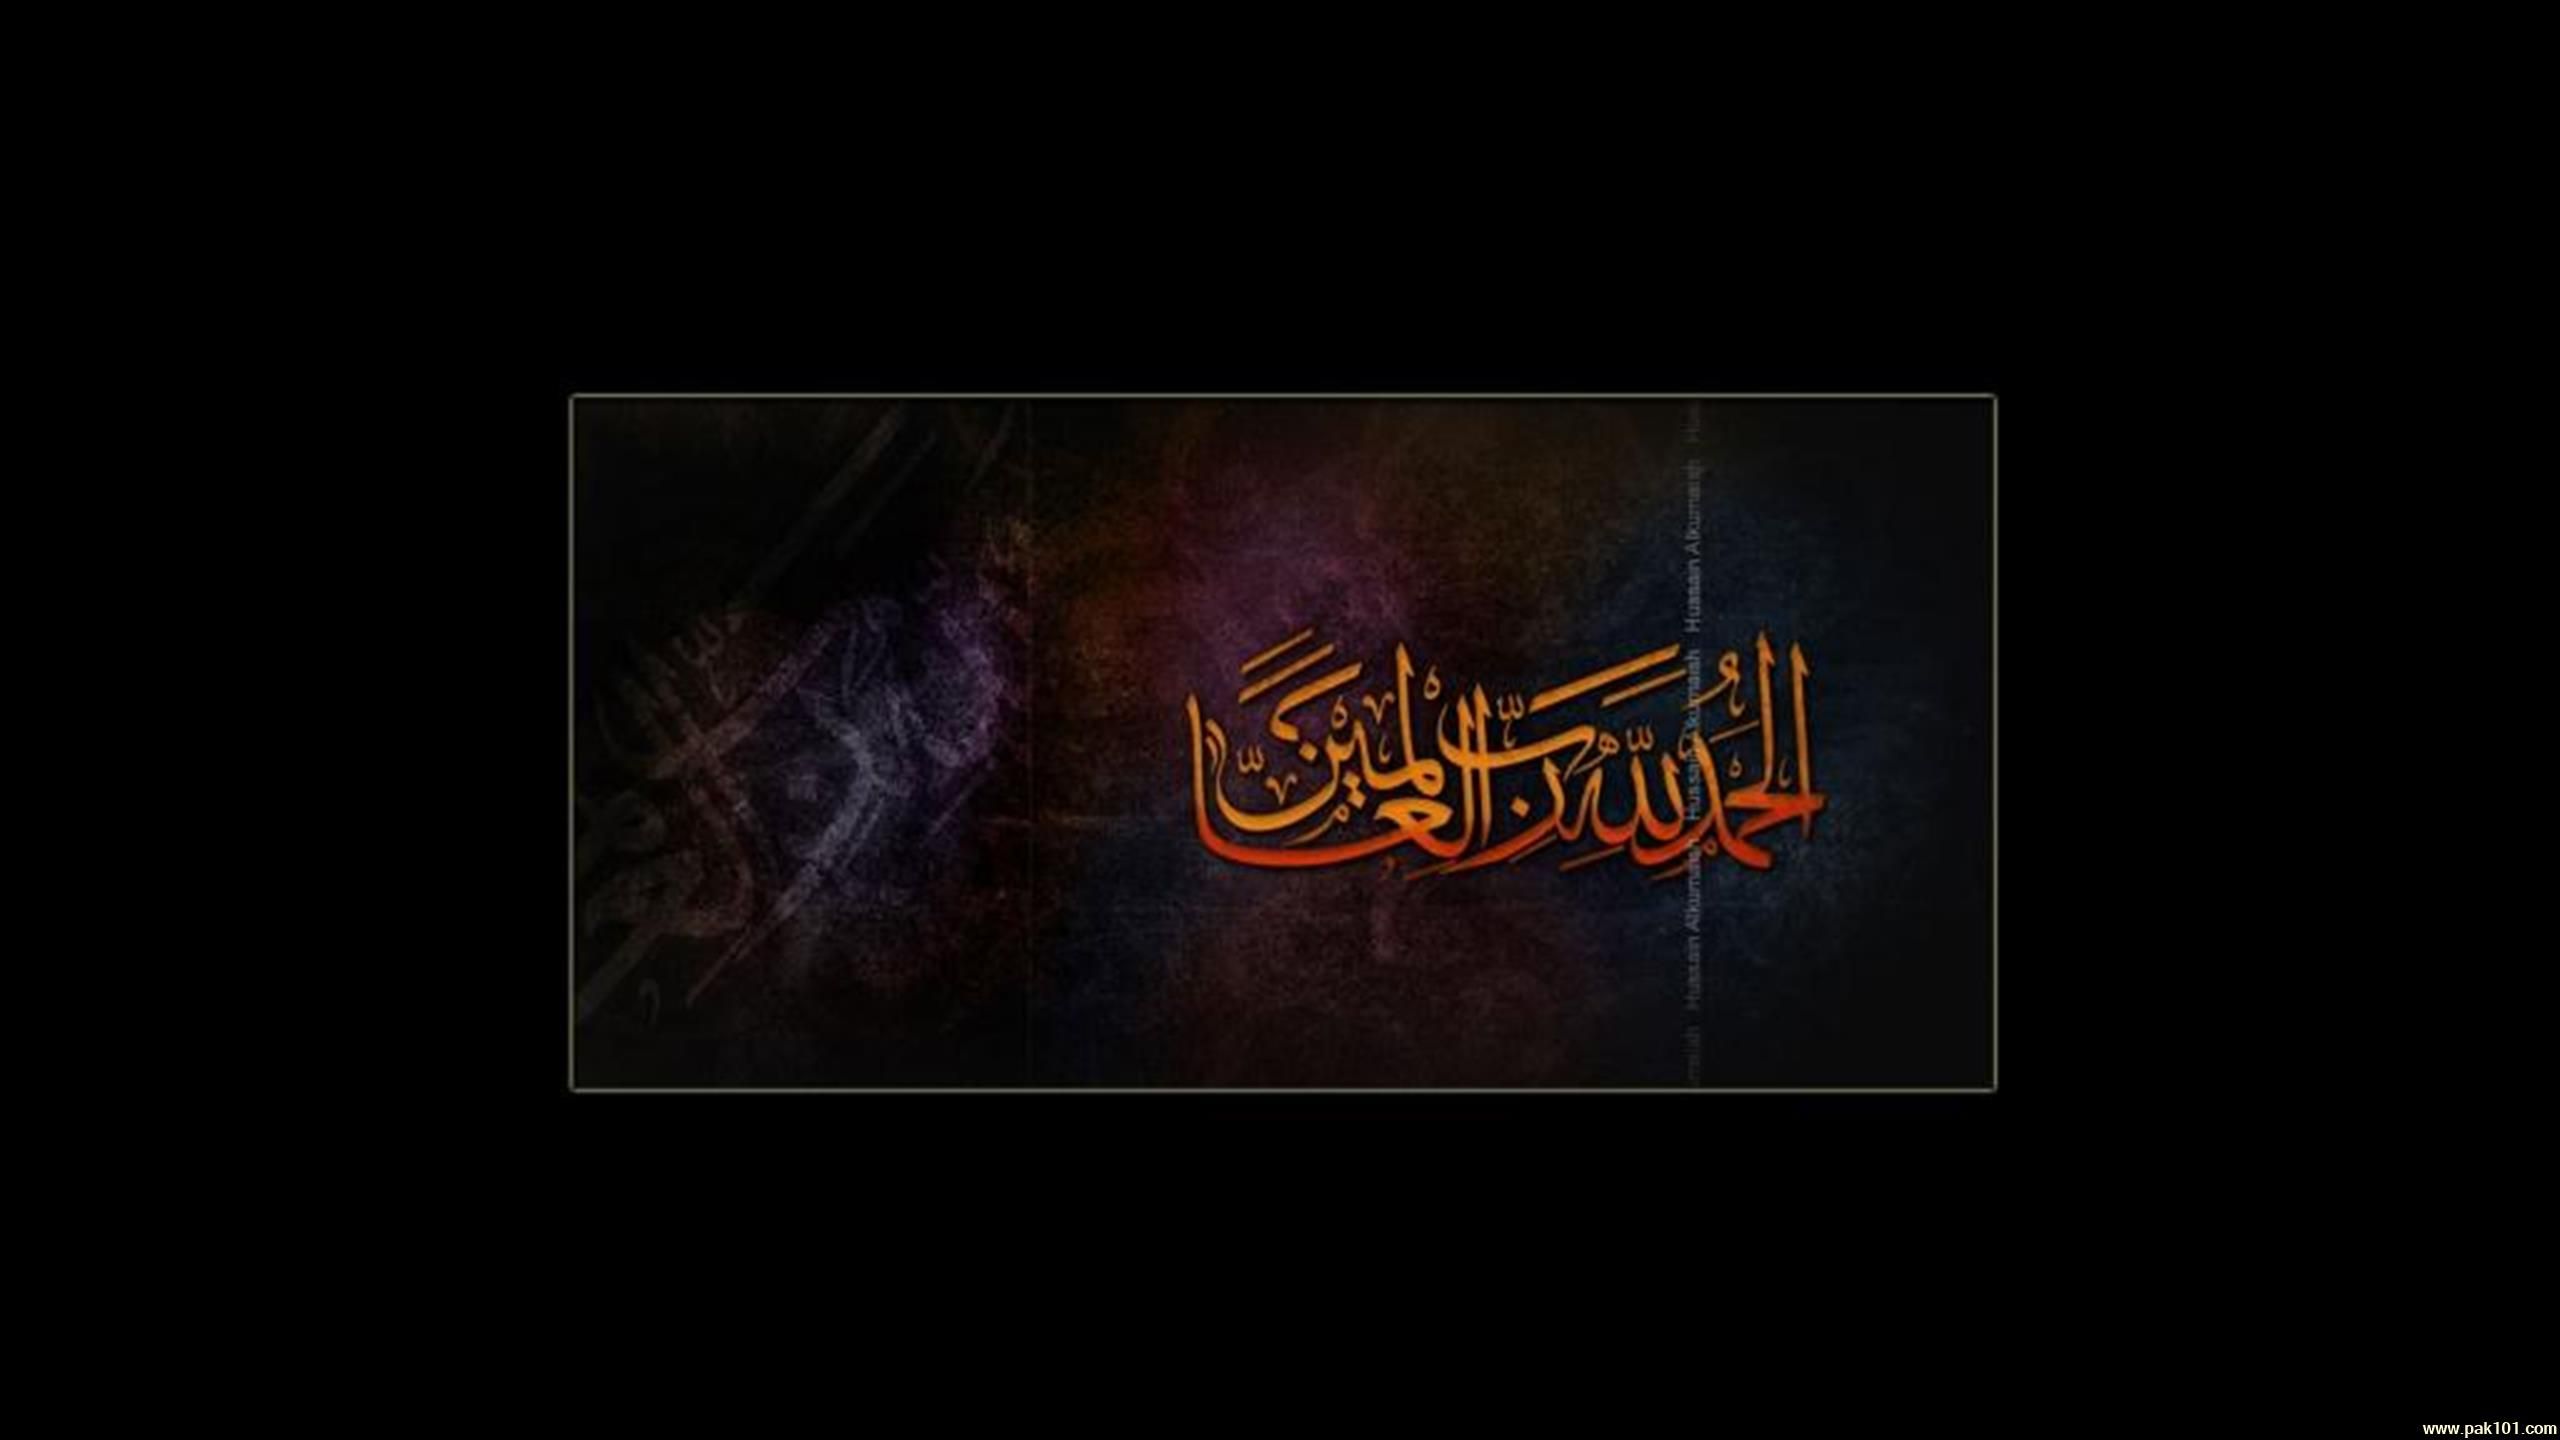 Wallpaper > Islamic > Alhamdulillah high quality! Free download